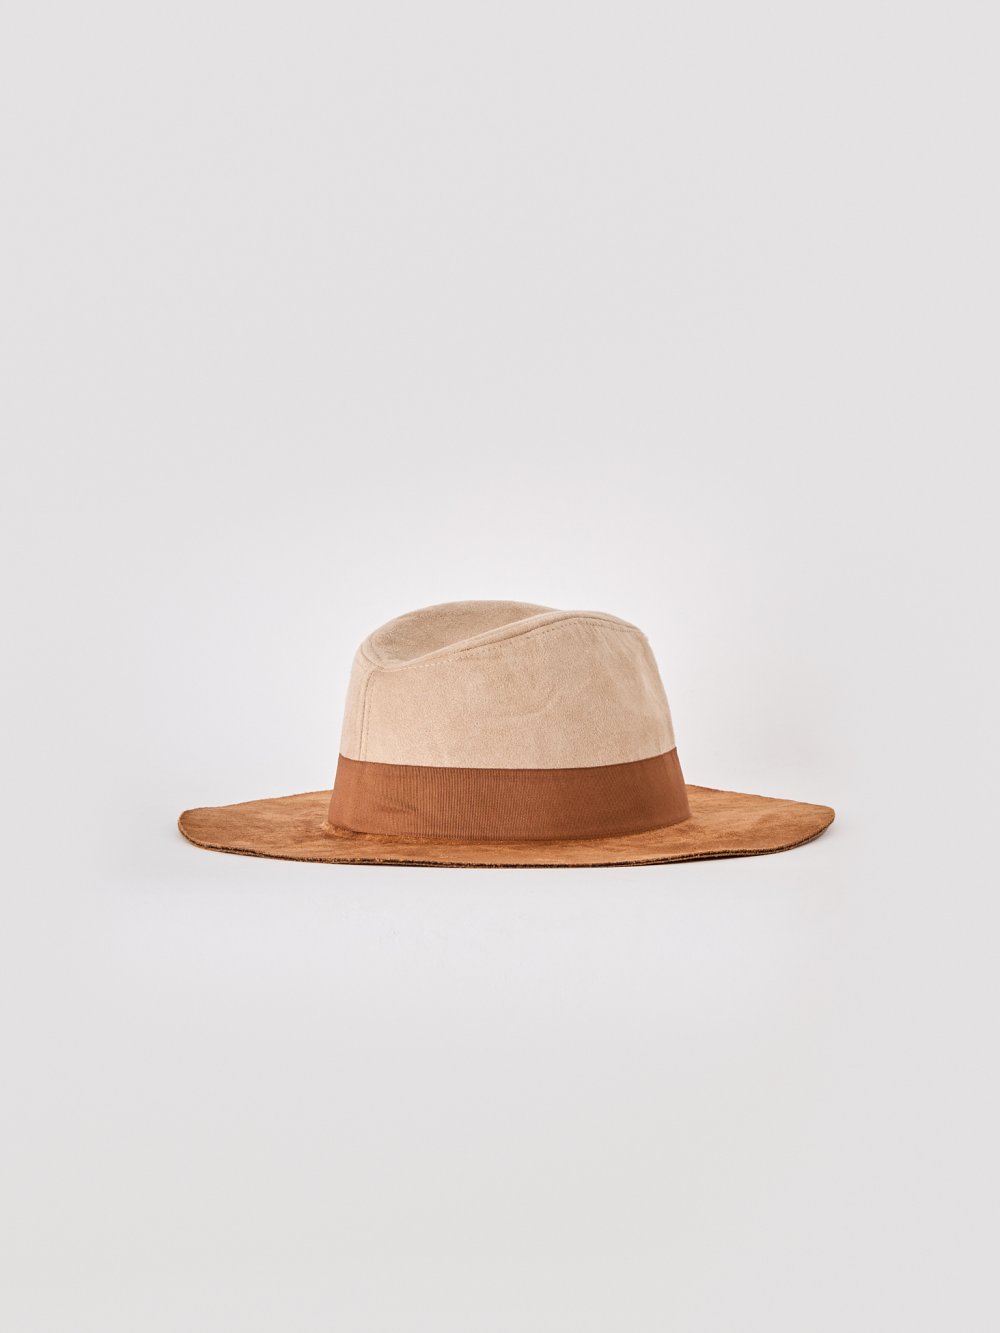 Béžovo-hnědý klobouk Alex